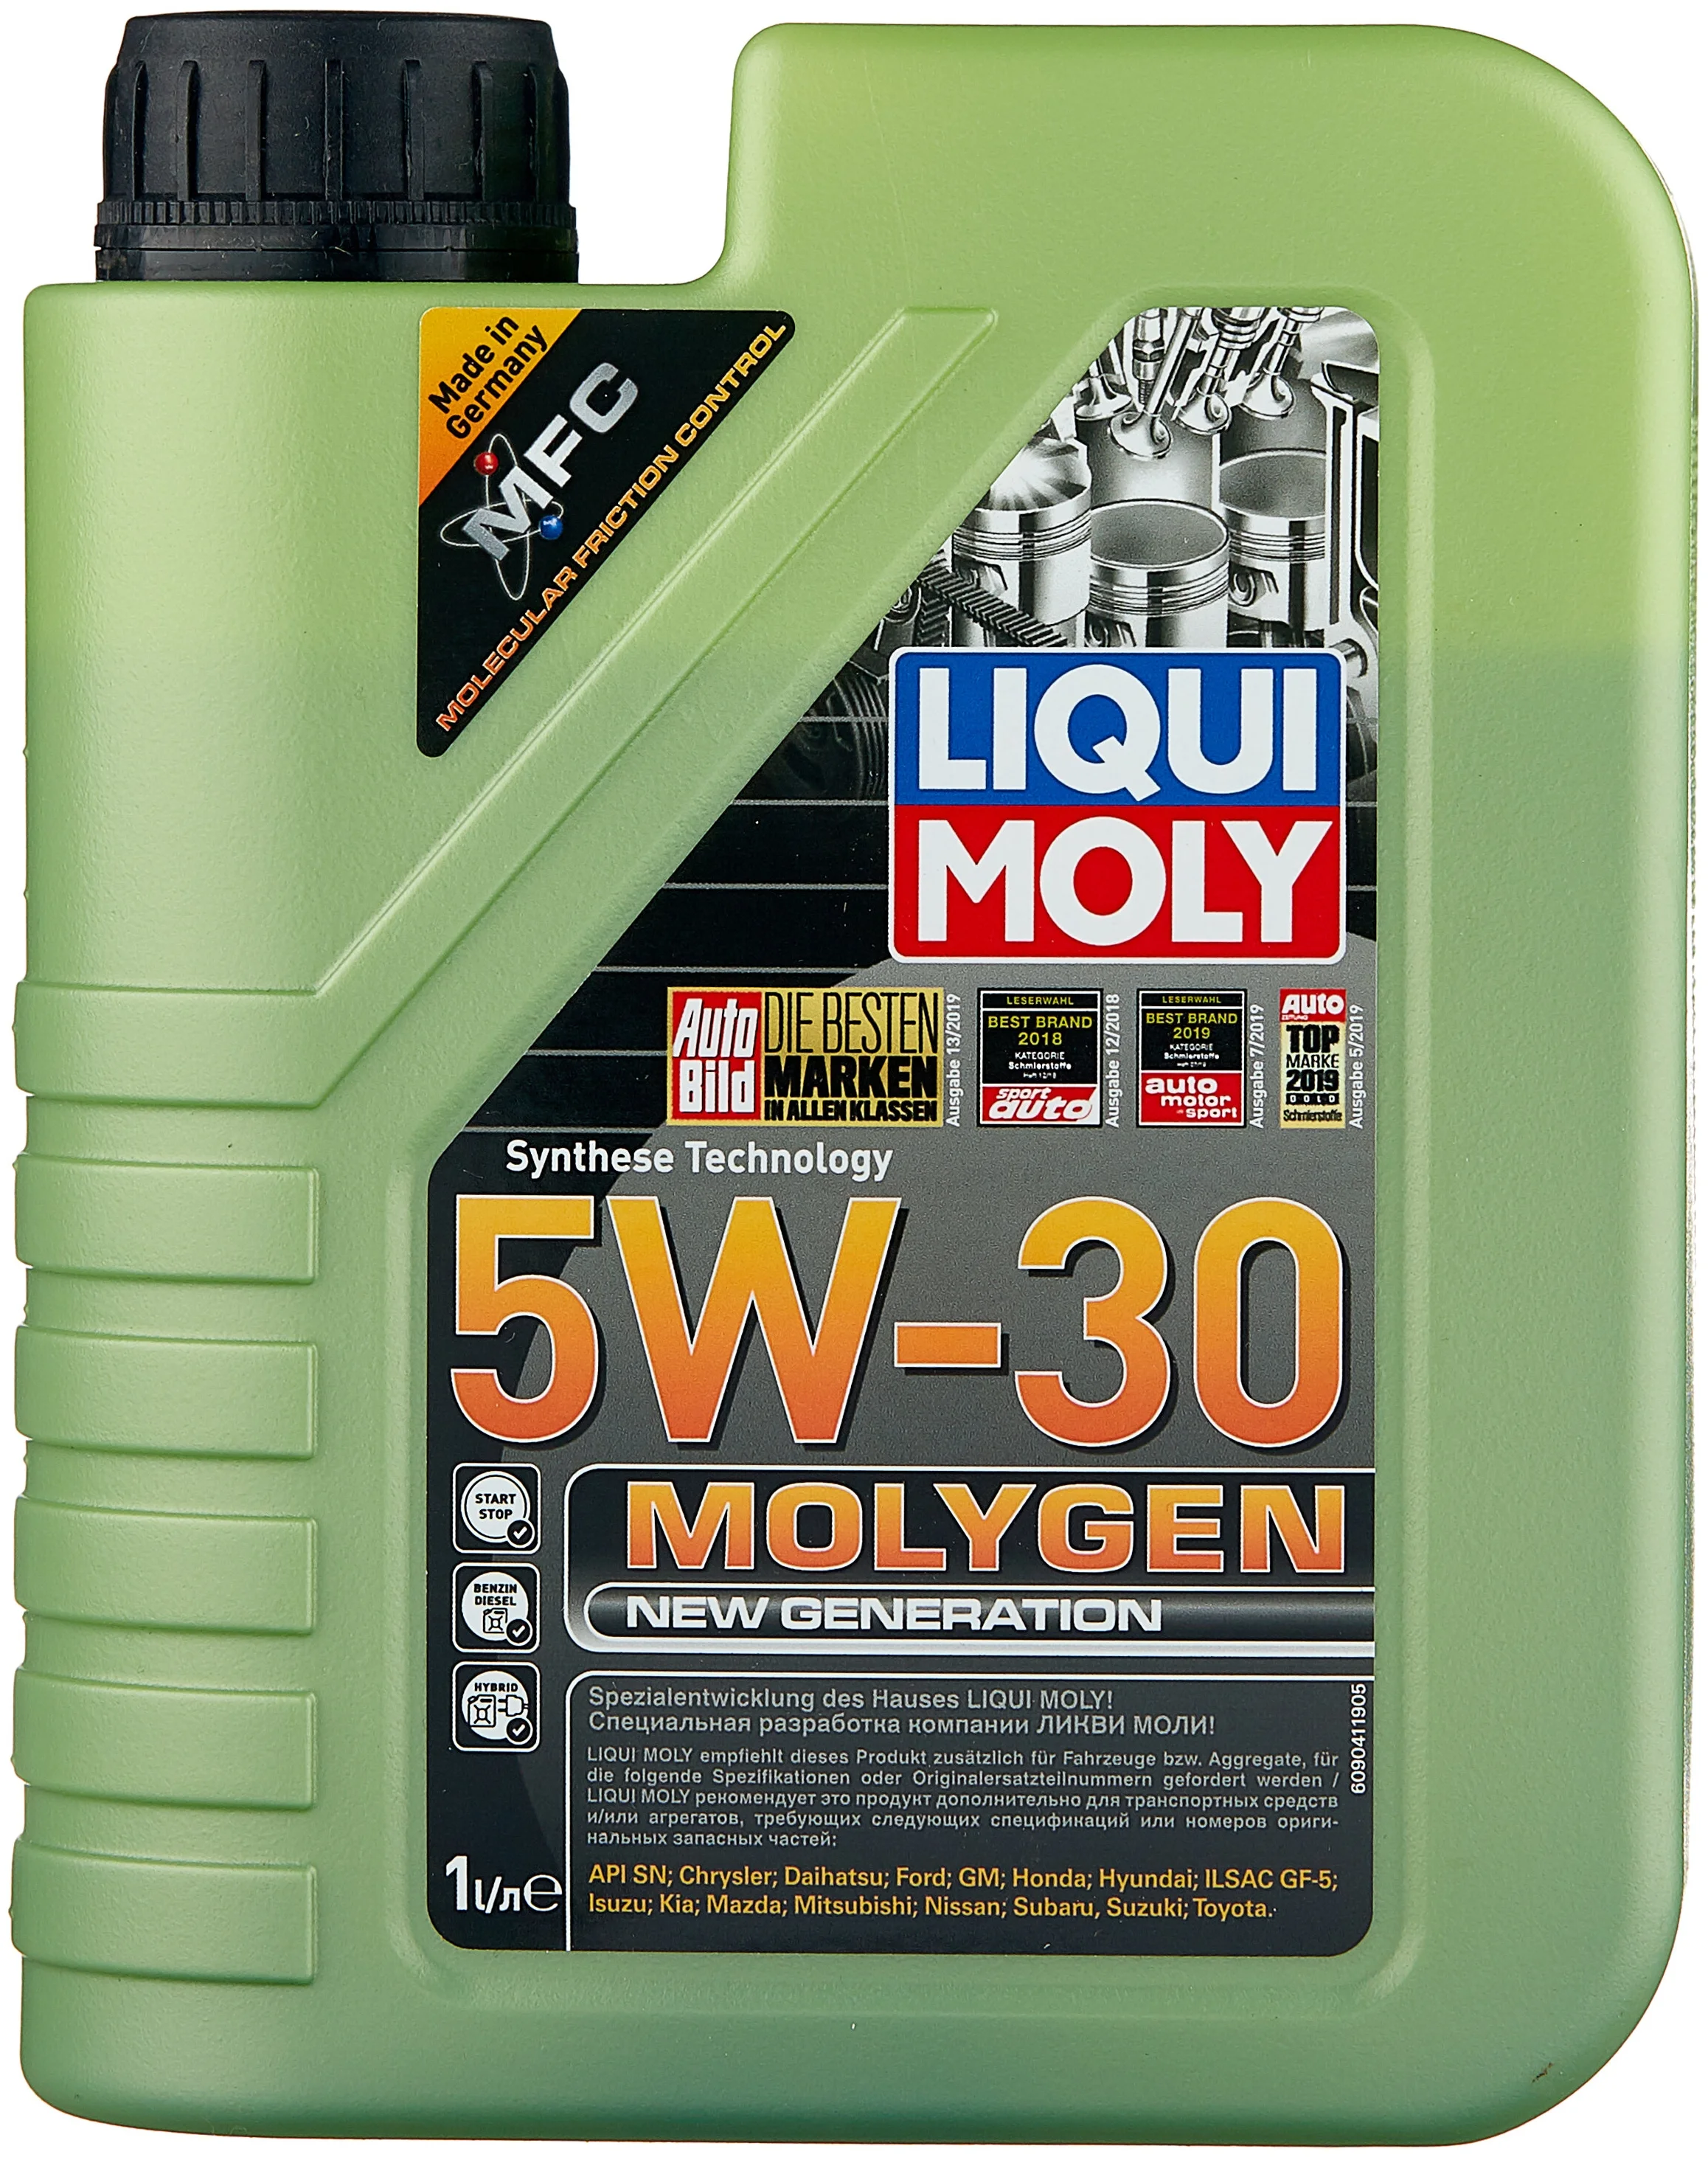 LIQUI MOLY Molygen New Generation 5W-30 - класс вязкости: 5W-30